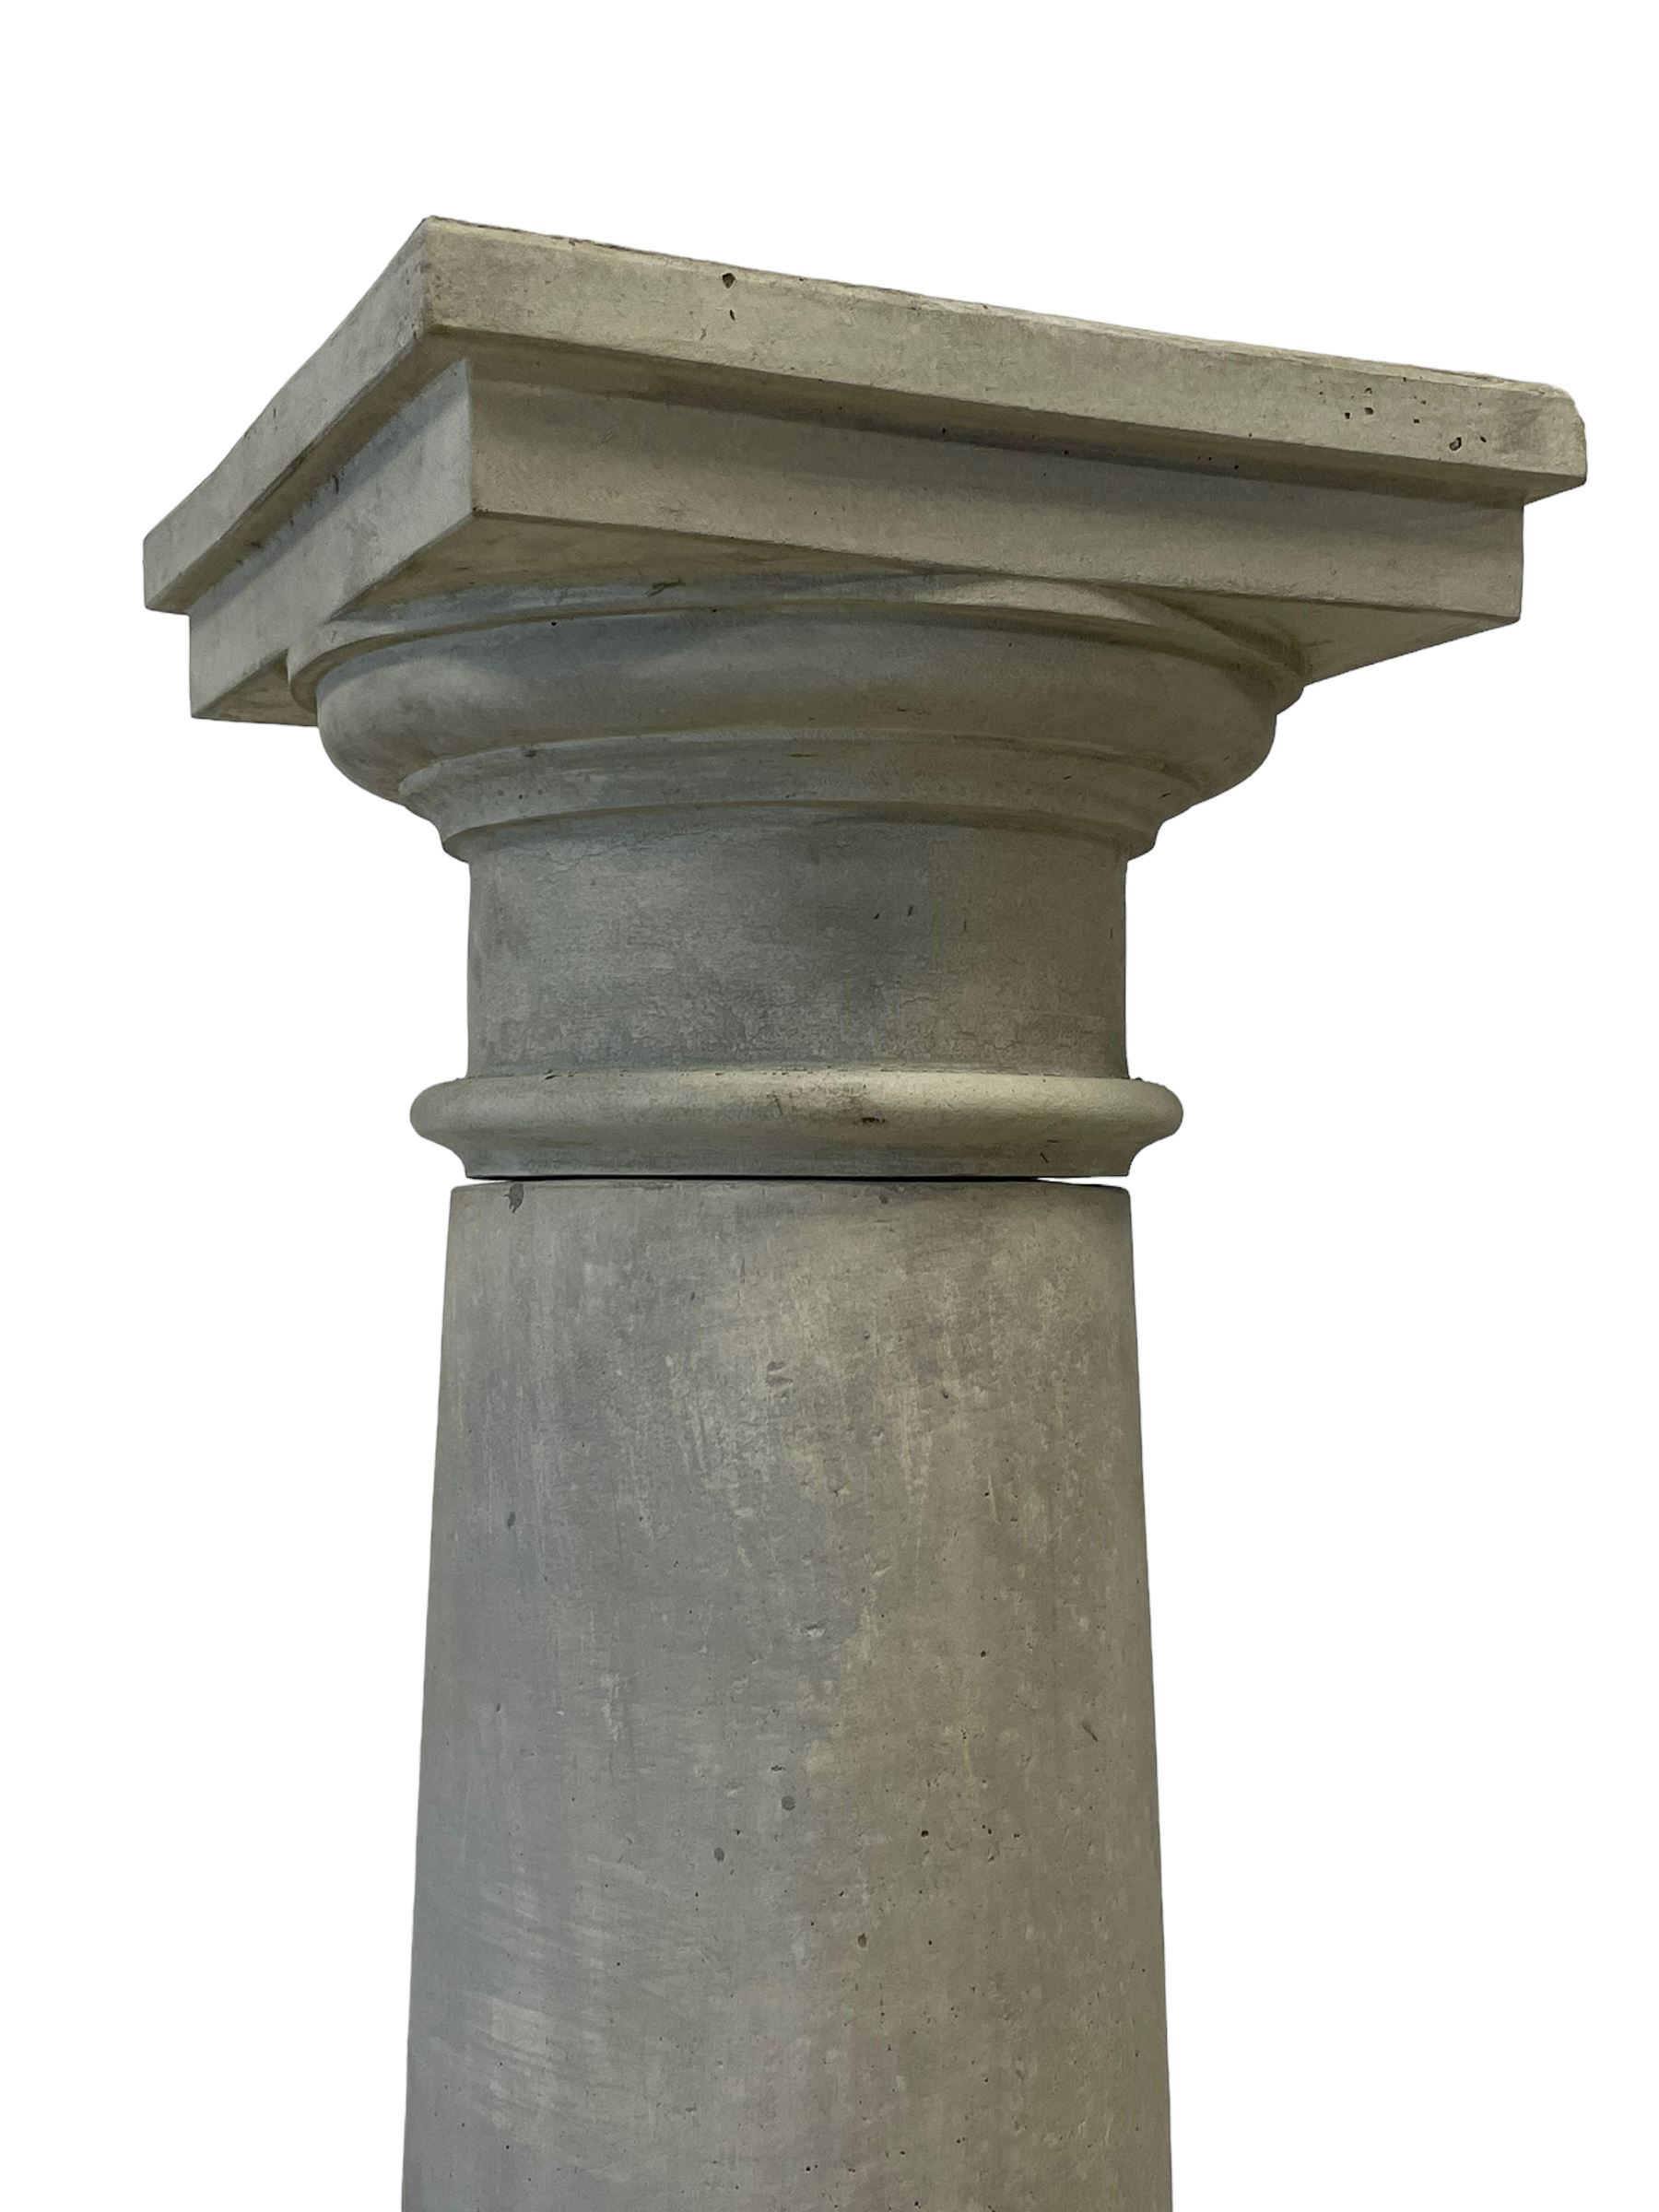 Pair of three-piece architectural pedestals - Image 10 of 11